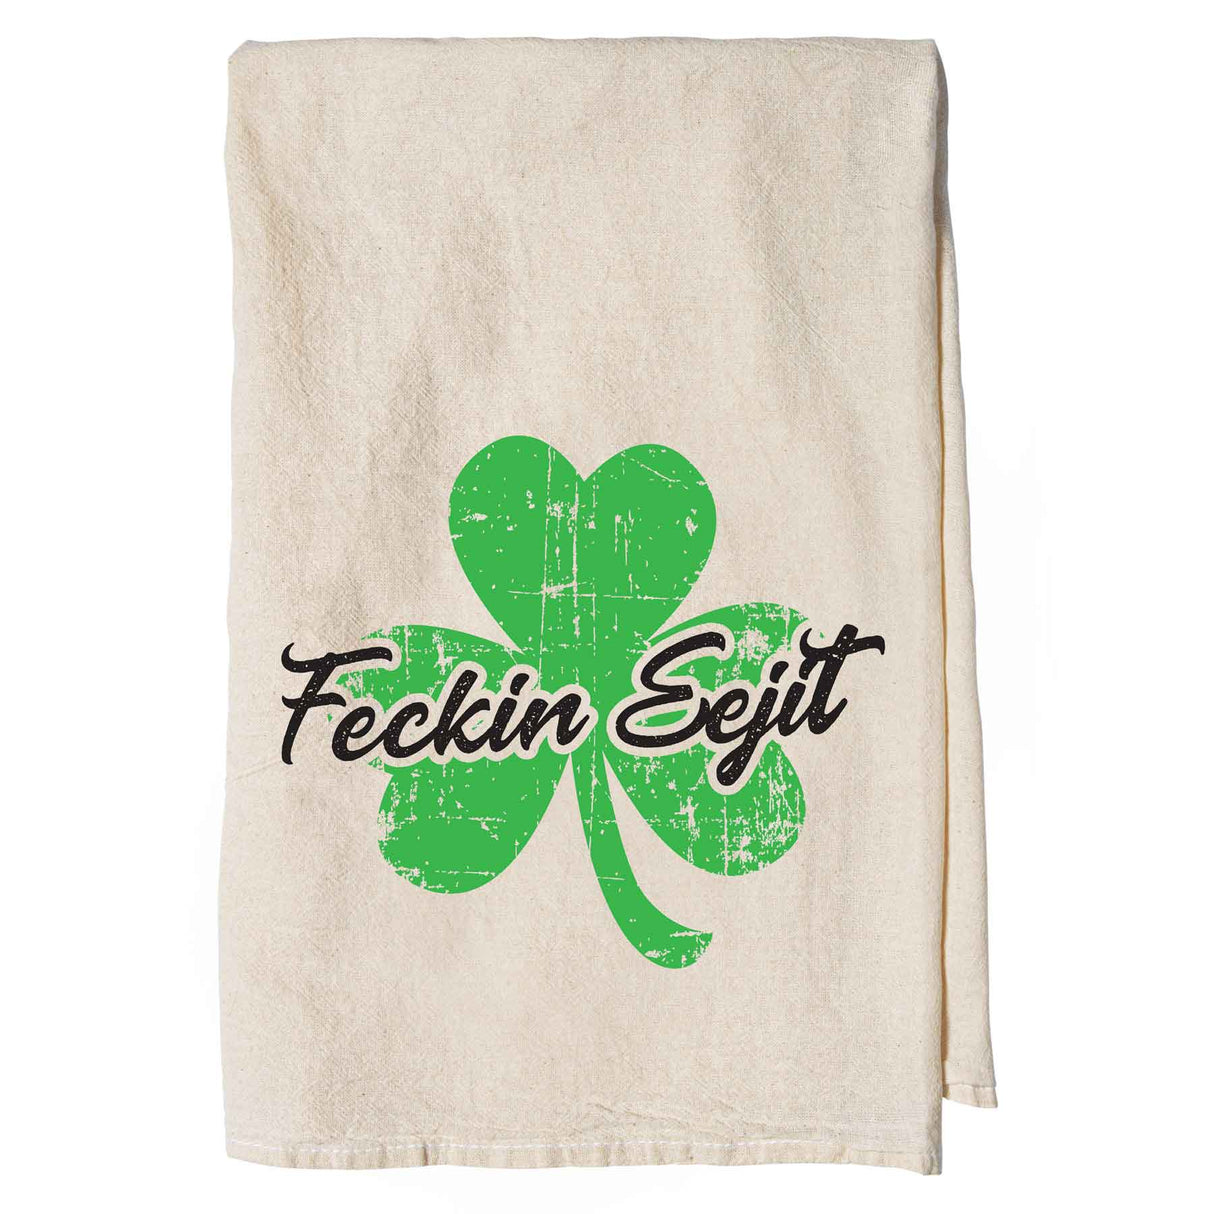 Feckin' Eejit Stamp - Creative Irish Gifts